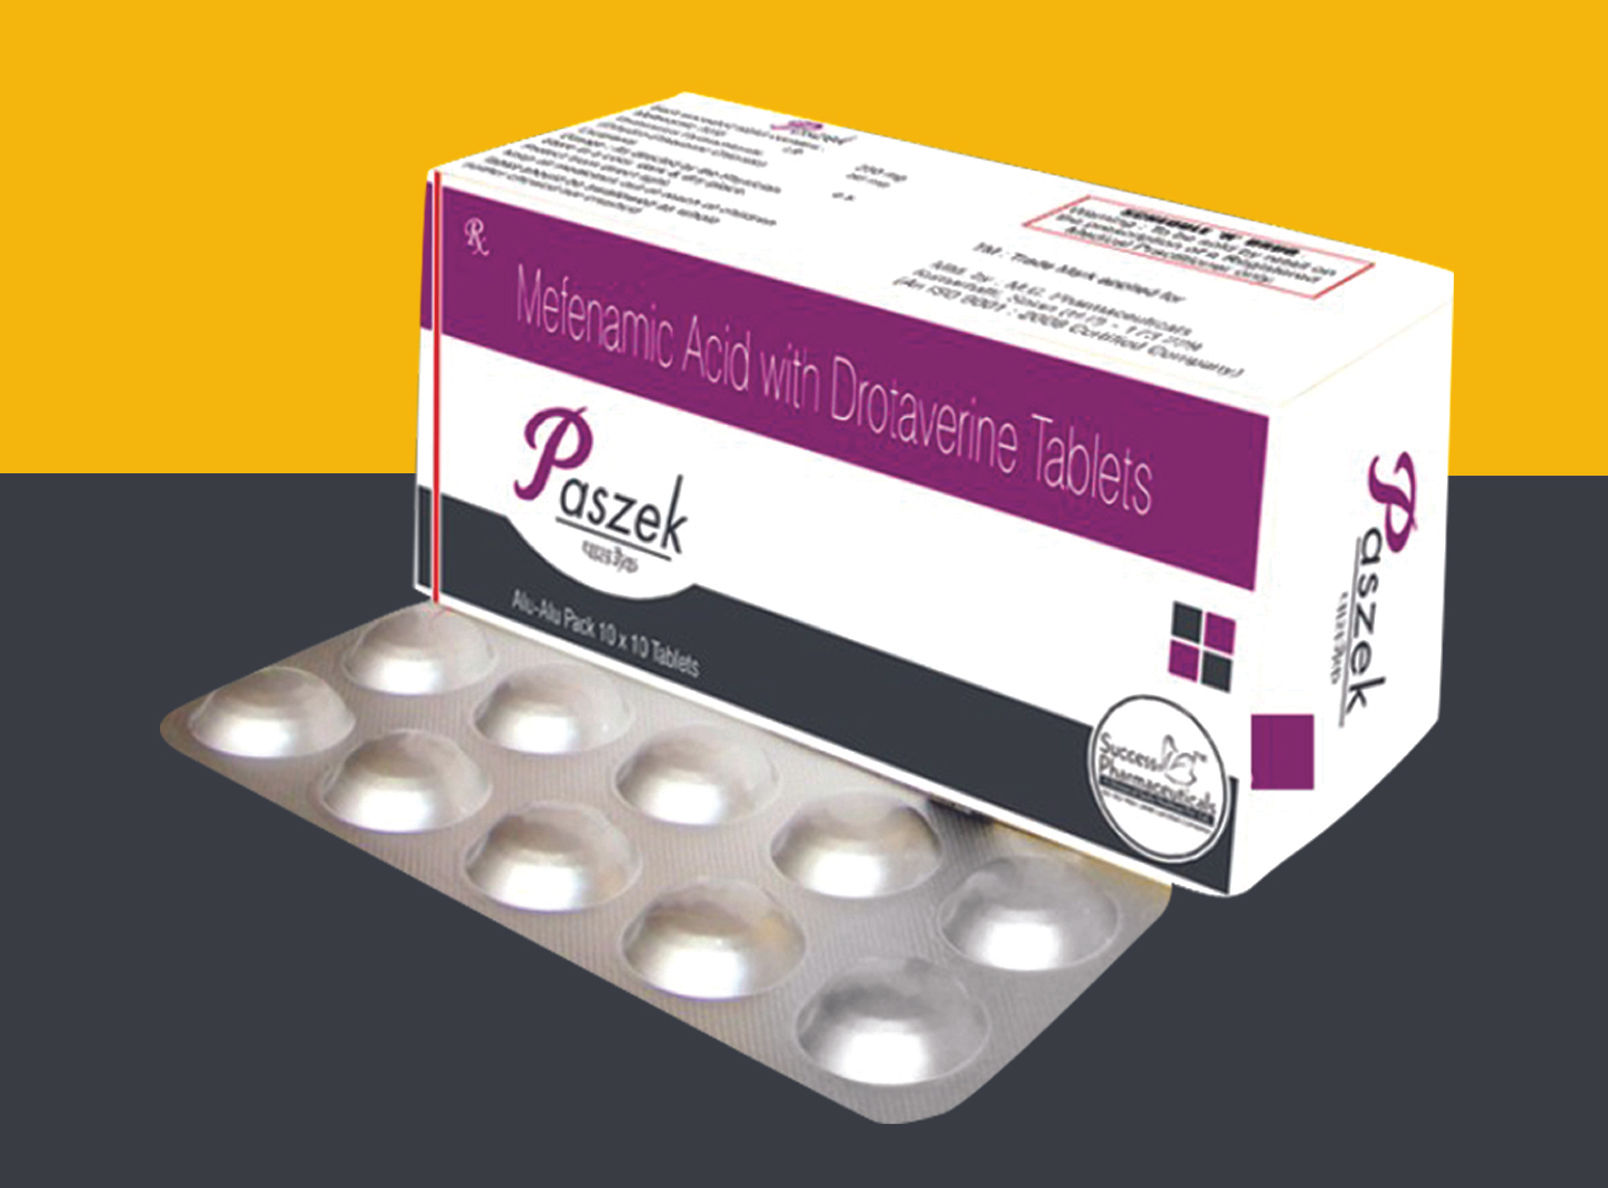 Drotaverine 80mg and Aceclofenac 100mg Tablets